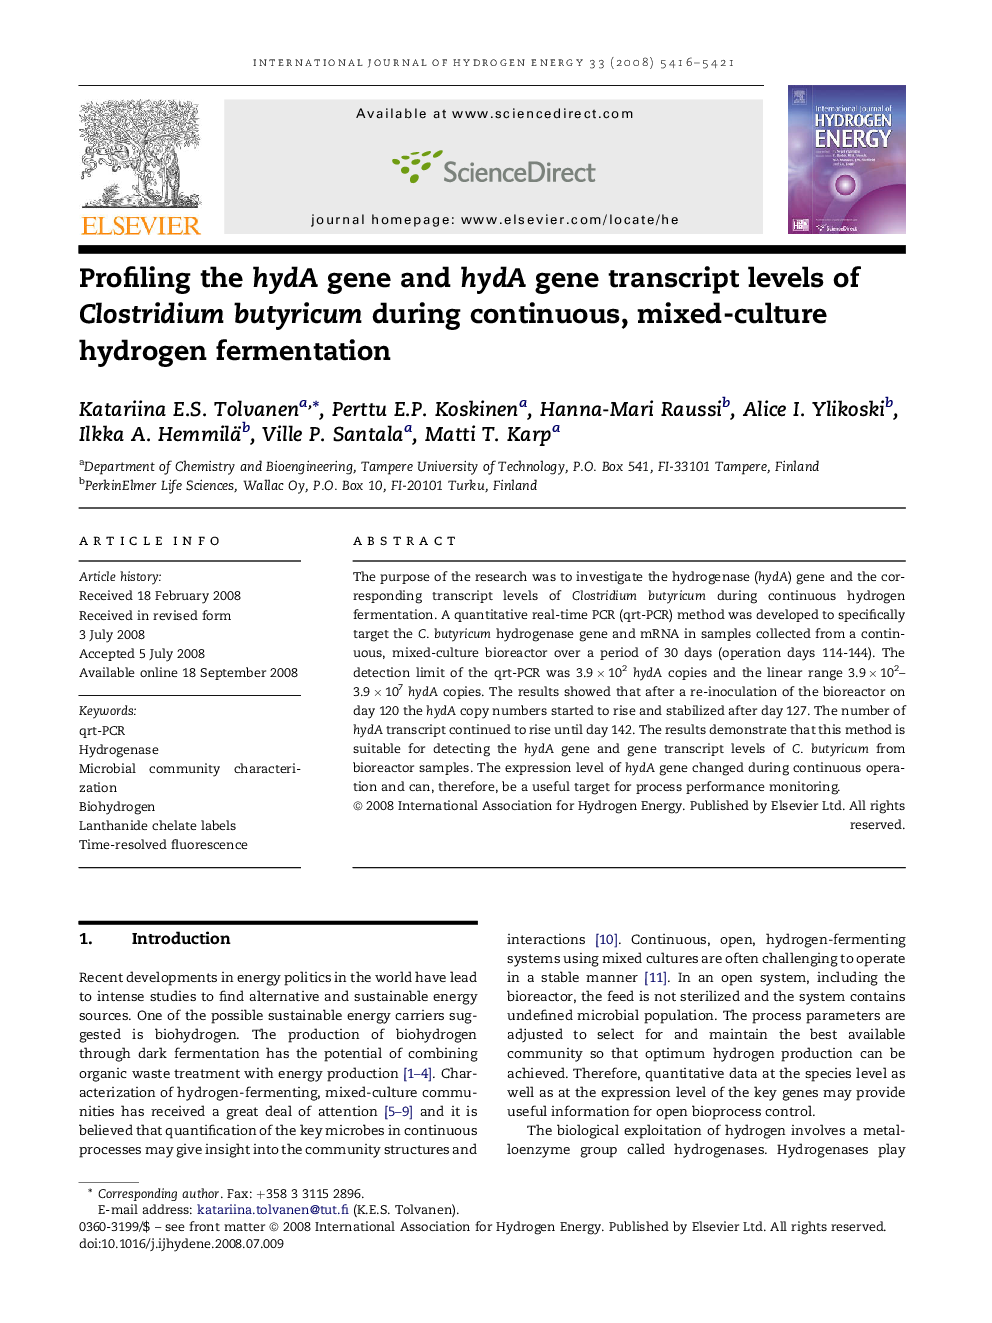 Profiling the hydA gene and hydA gene transcript levels of Clostridium butyricum during continuous, mixed-culture hydrogen fermentation